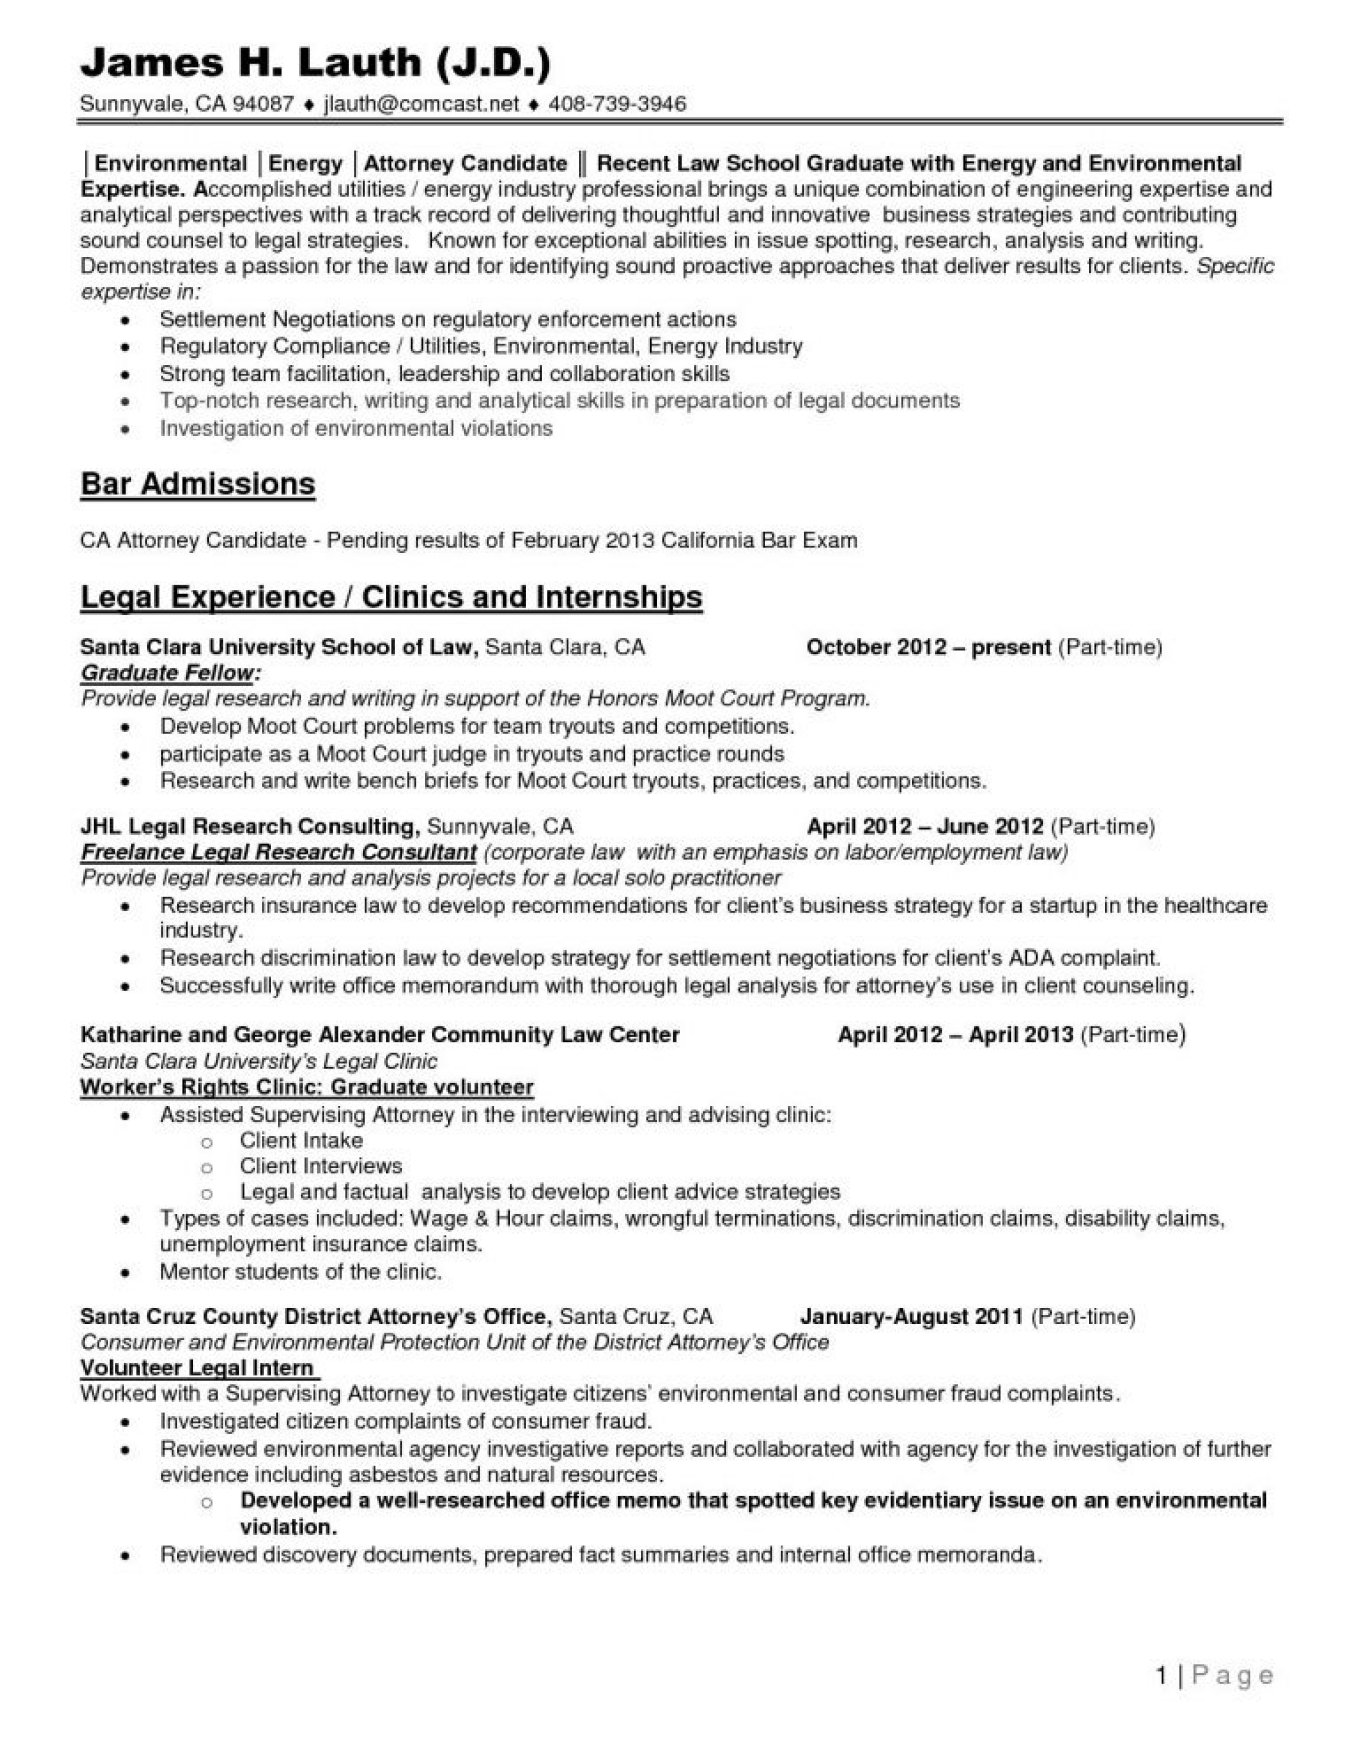 resume template harvard law school